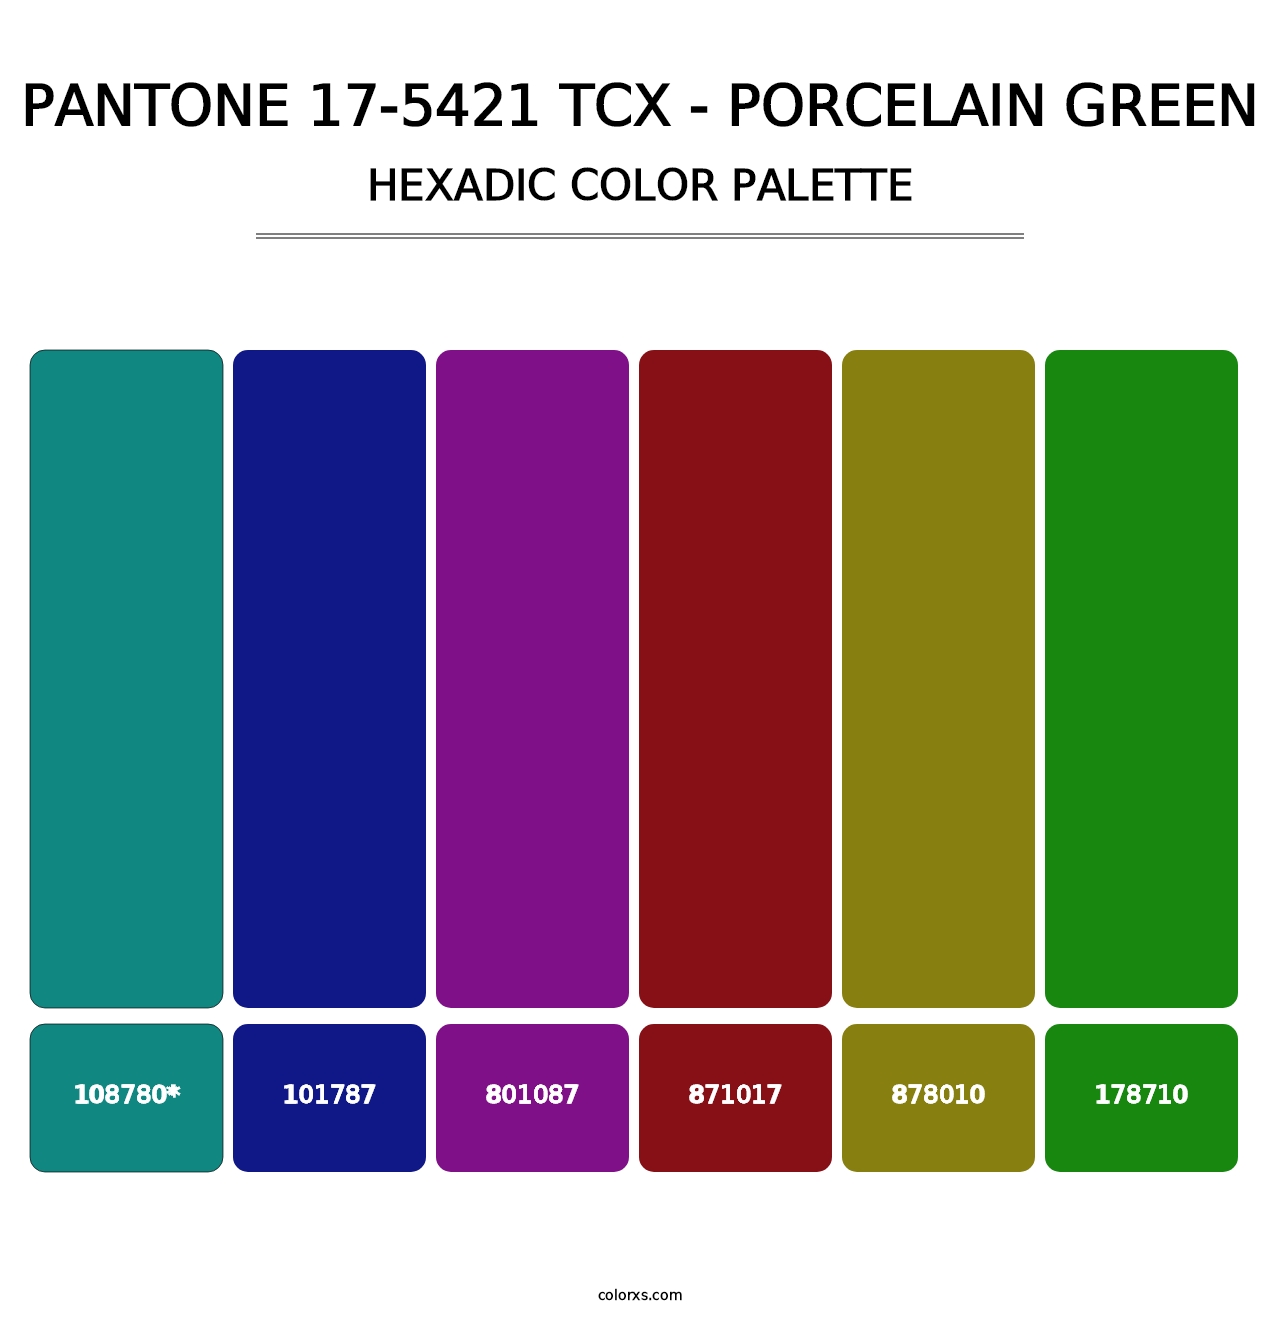 PANTONE 17-5421 TCX - Porcelain Green - Hexadic Color Palette